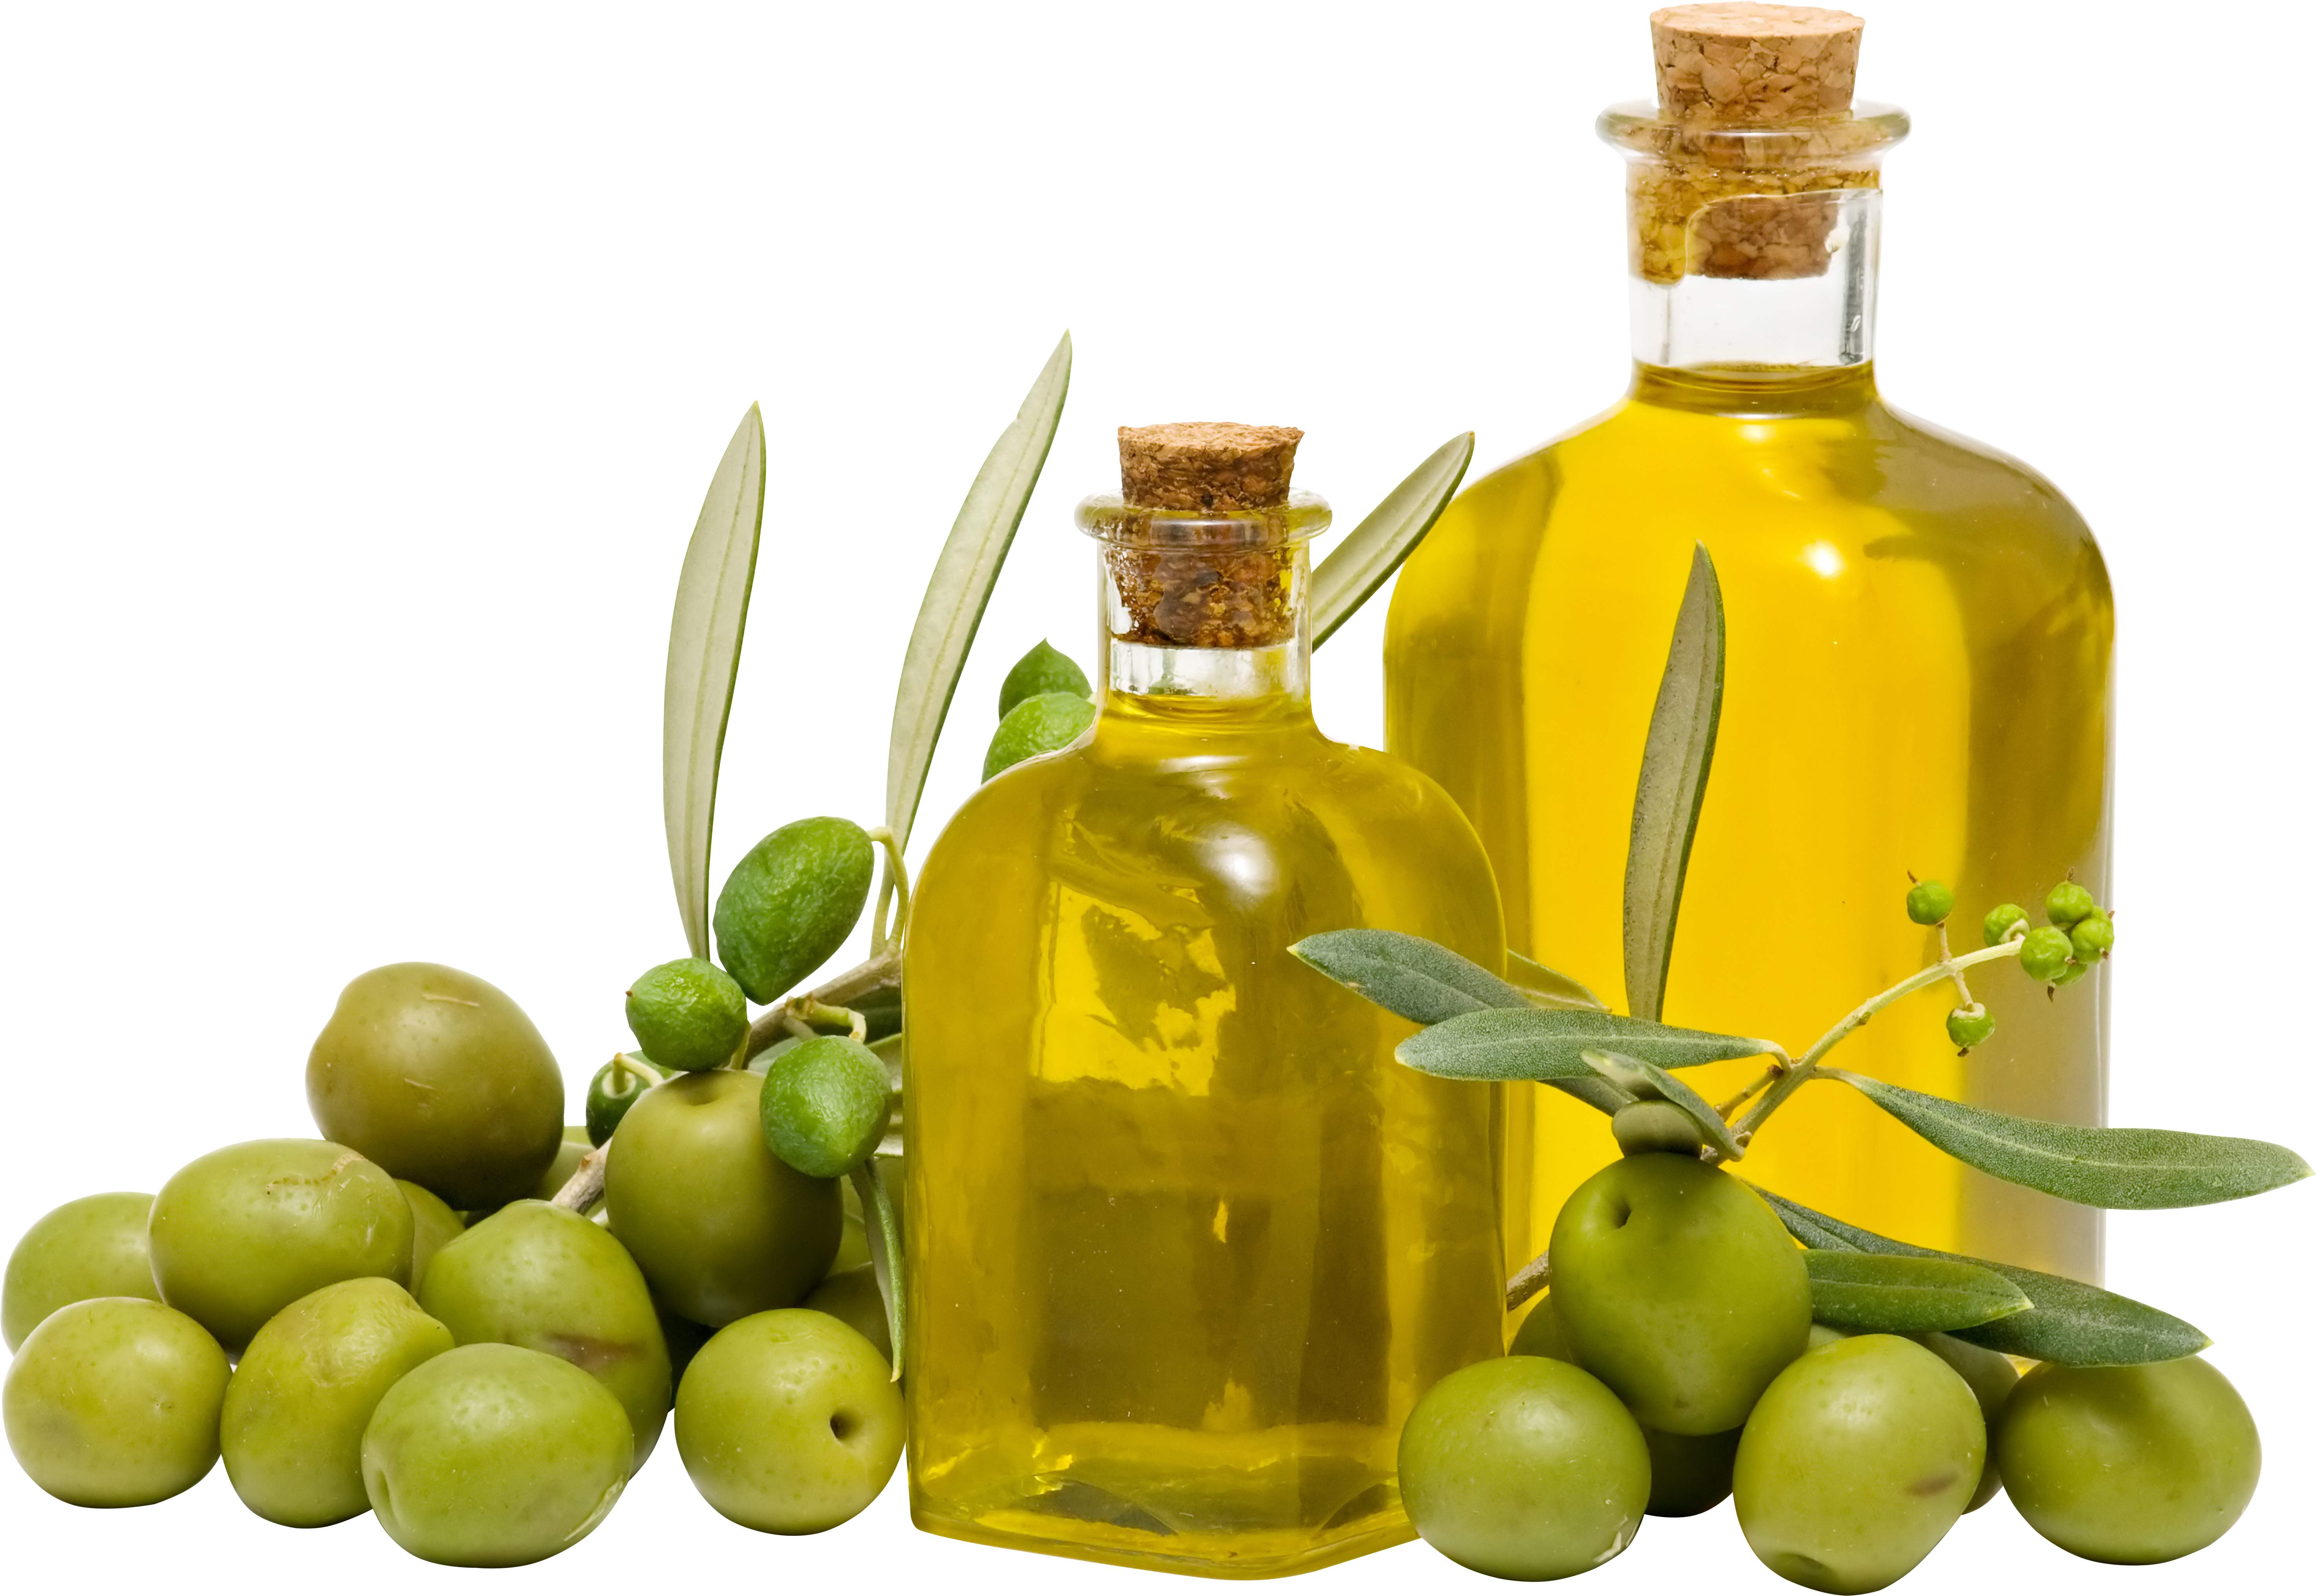 Оливковое масло PNG